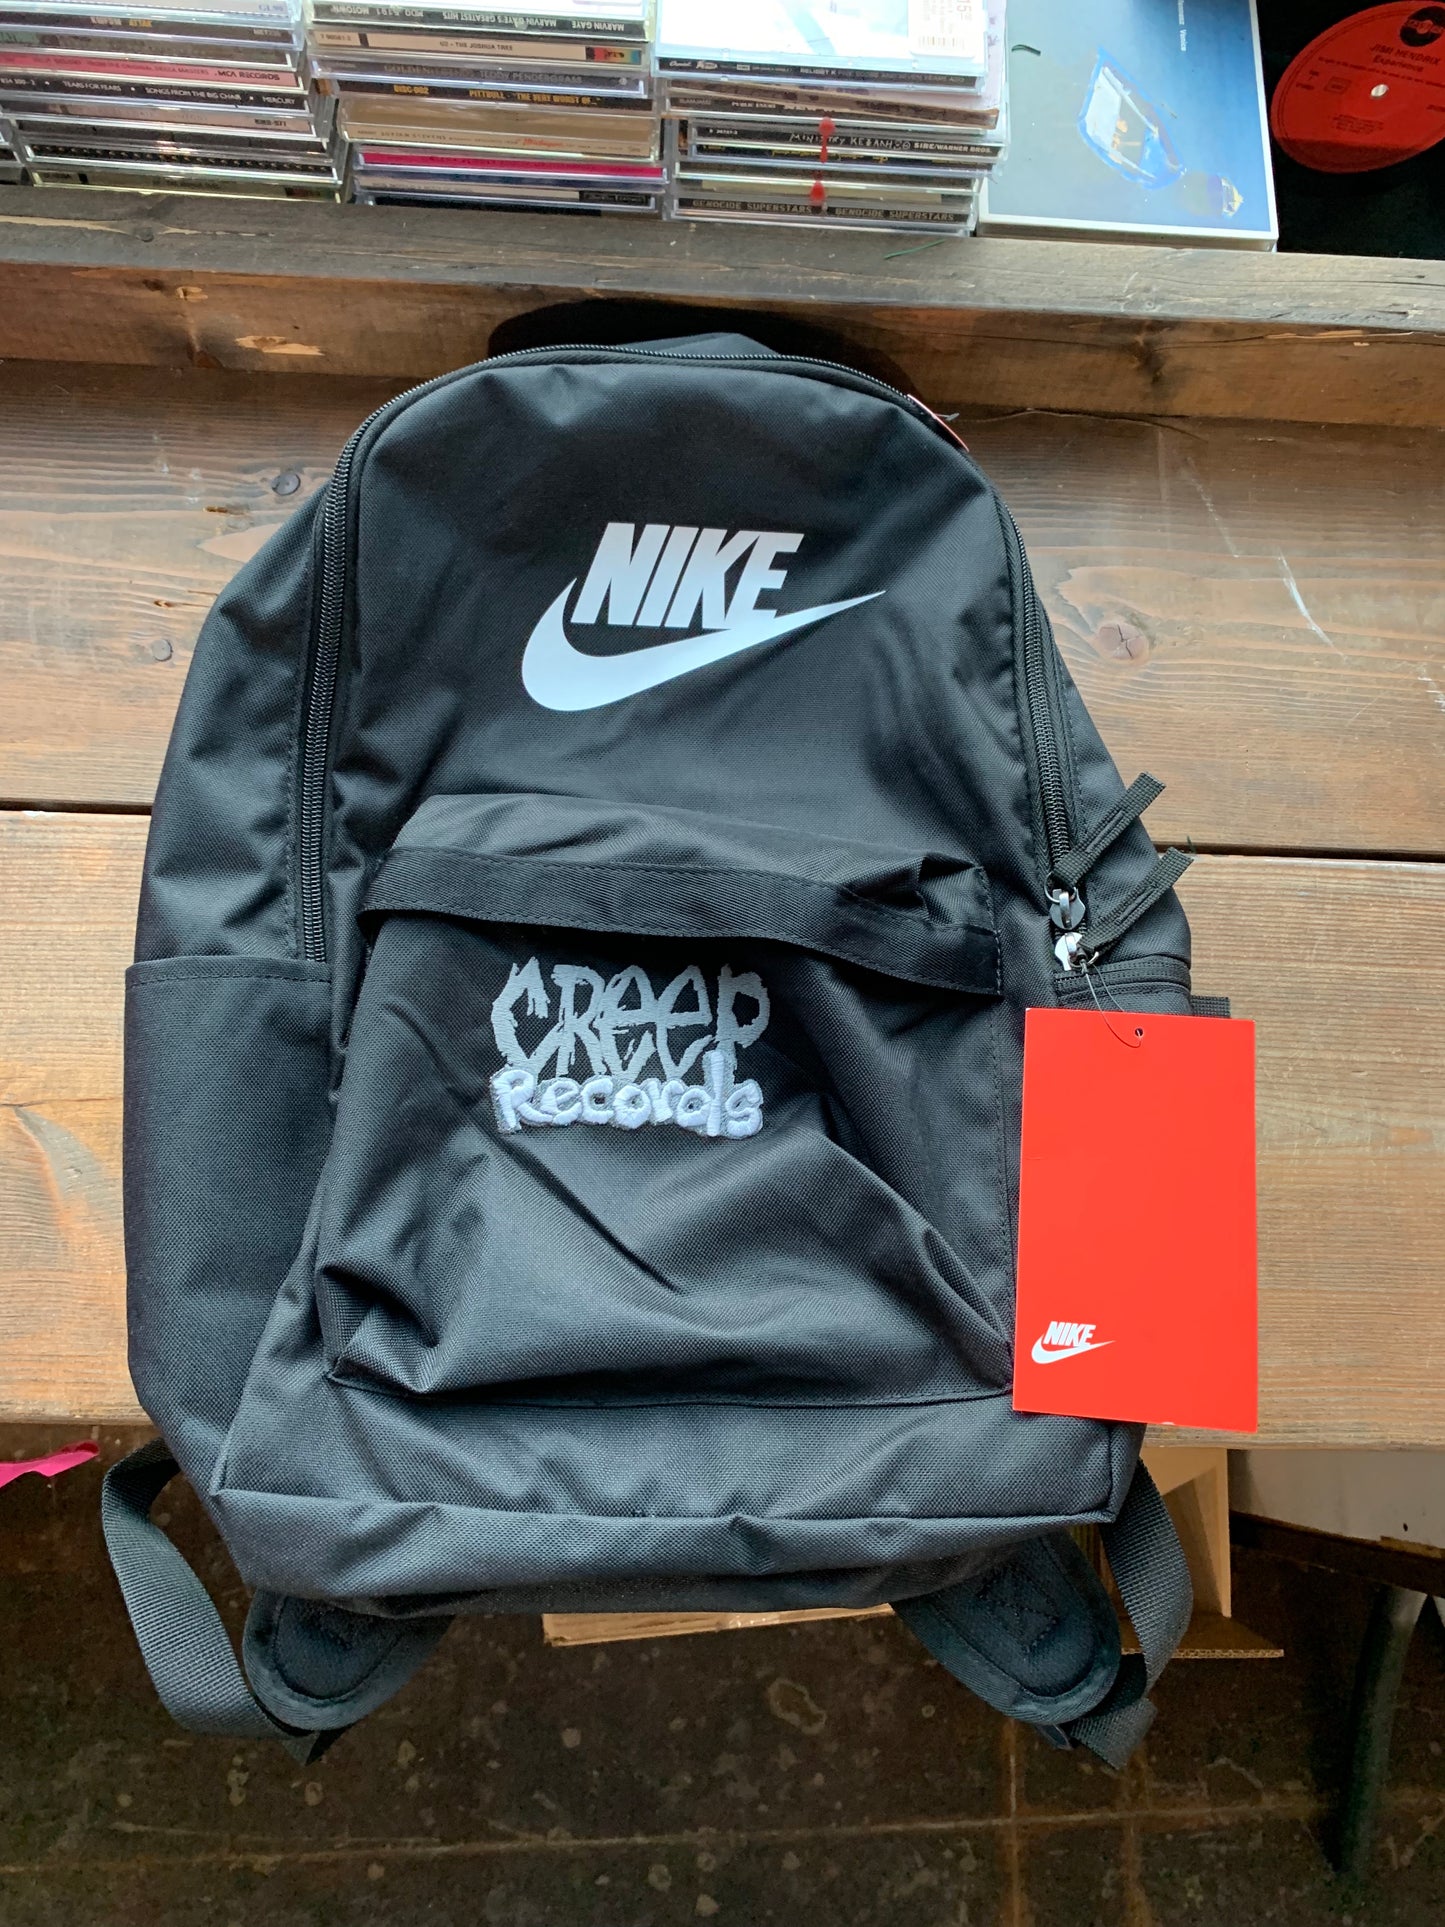 Creep Records Nike Backpack